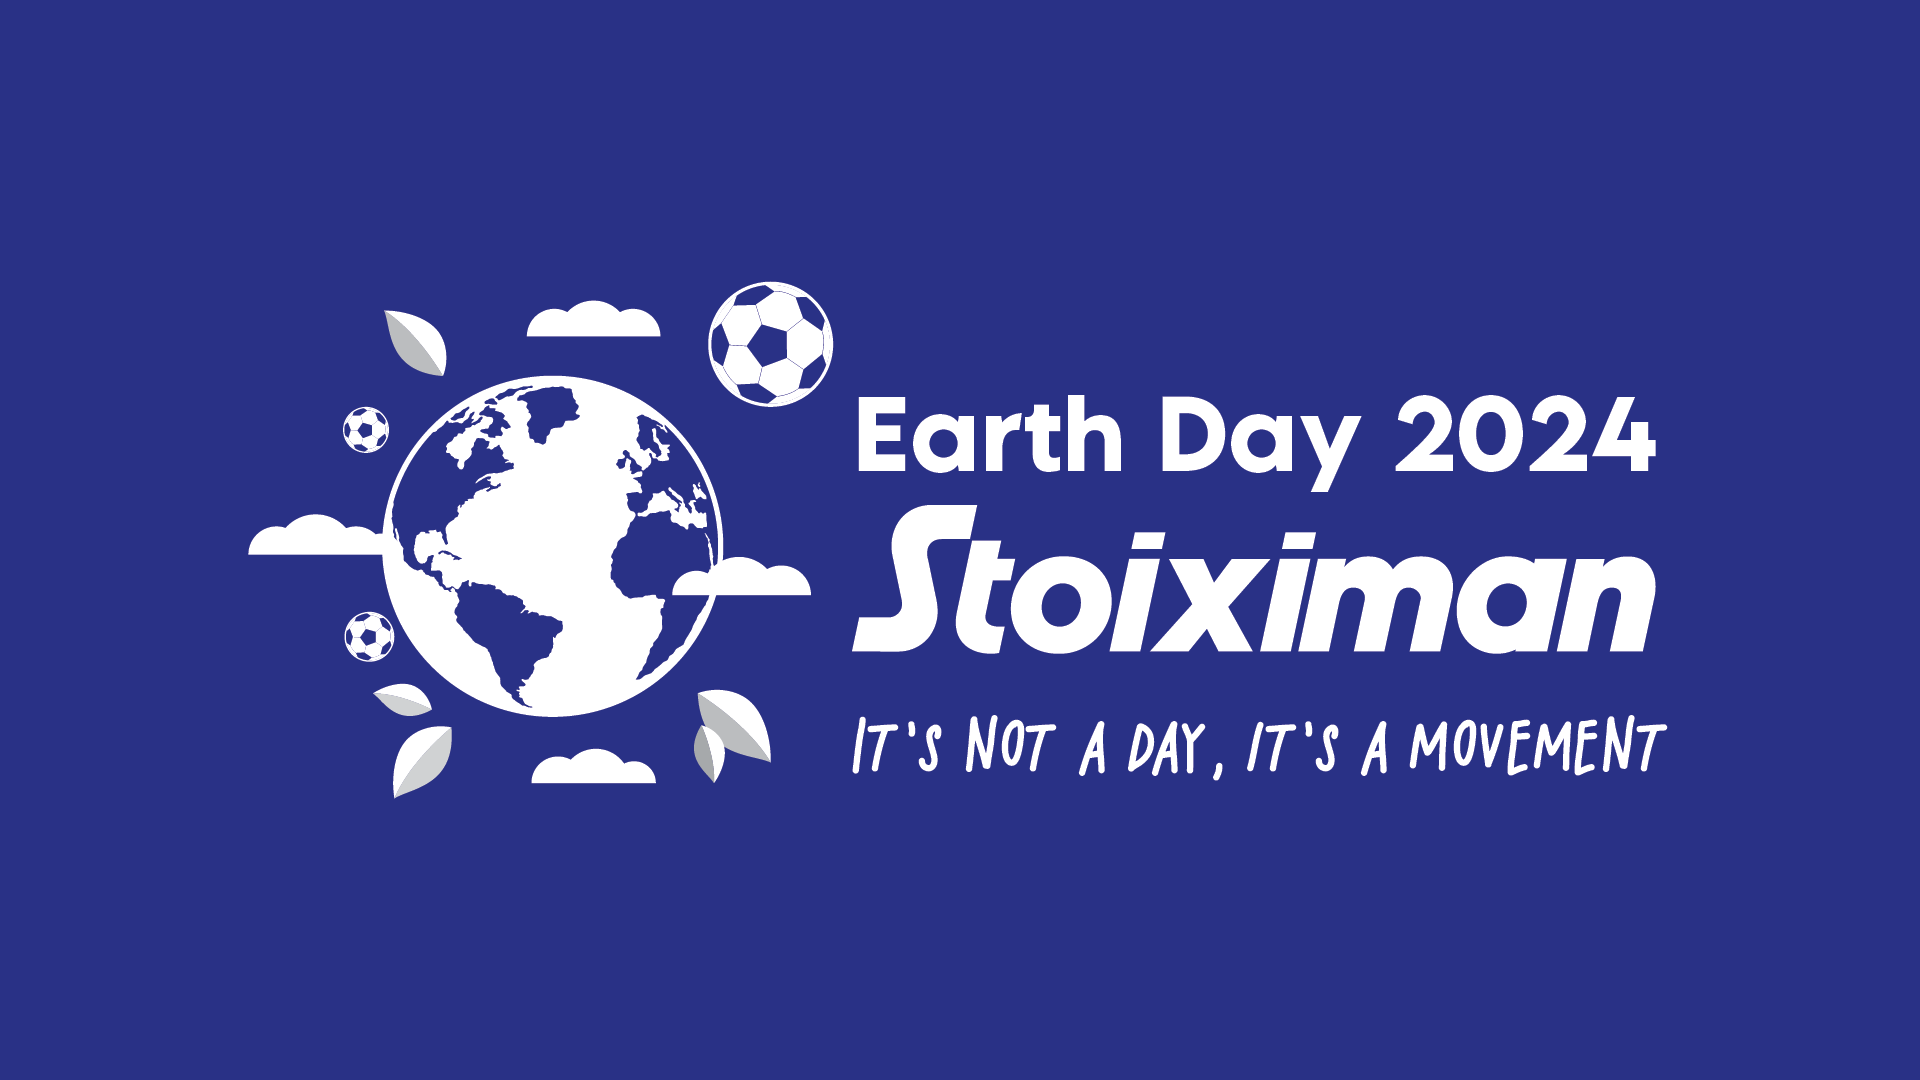 H ημέρα της Γης πλησιάζει και η Stoiximan μας υπενθυμίζει «It’s Not a day …  it’s a movement!»